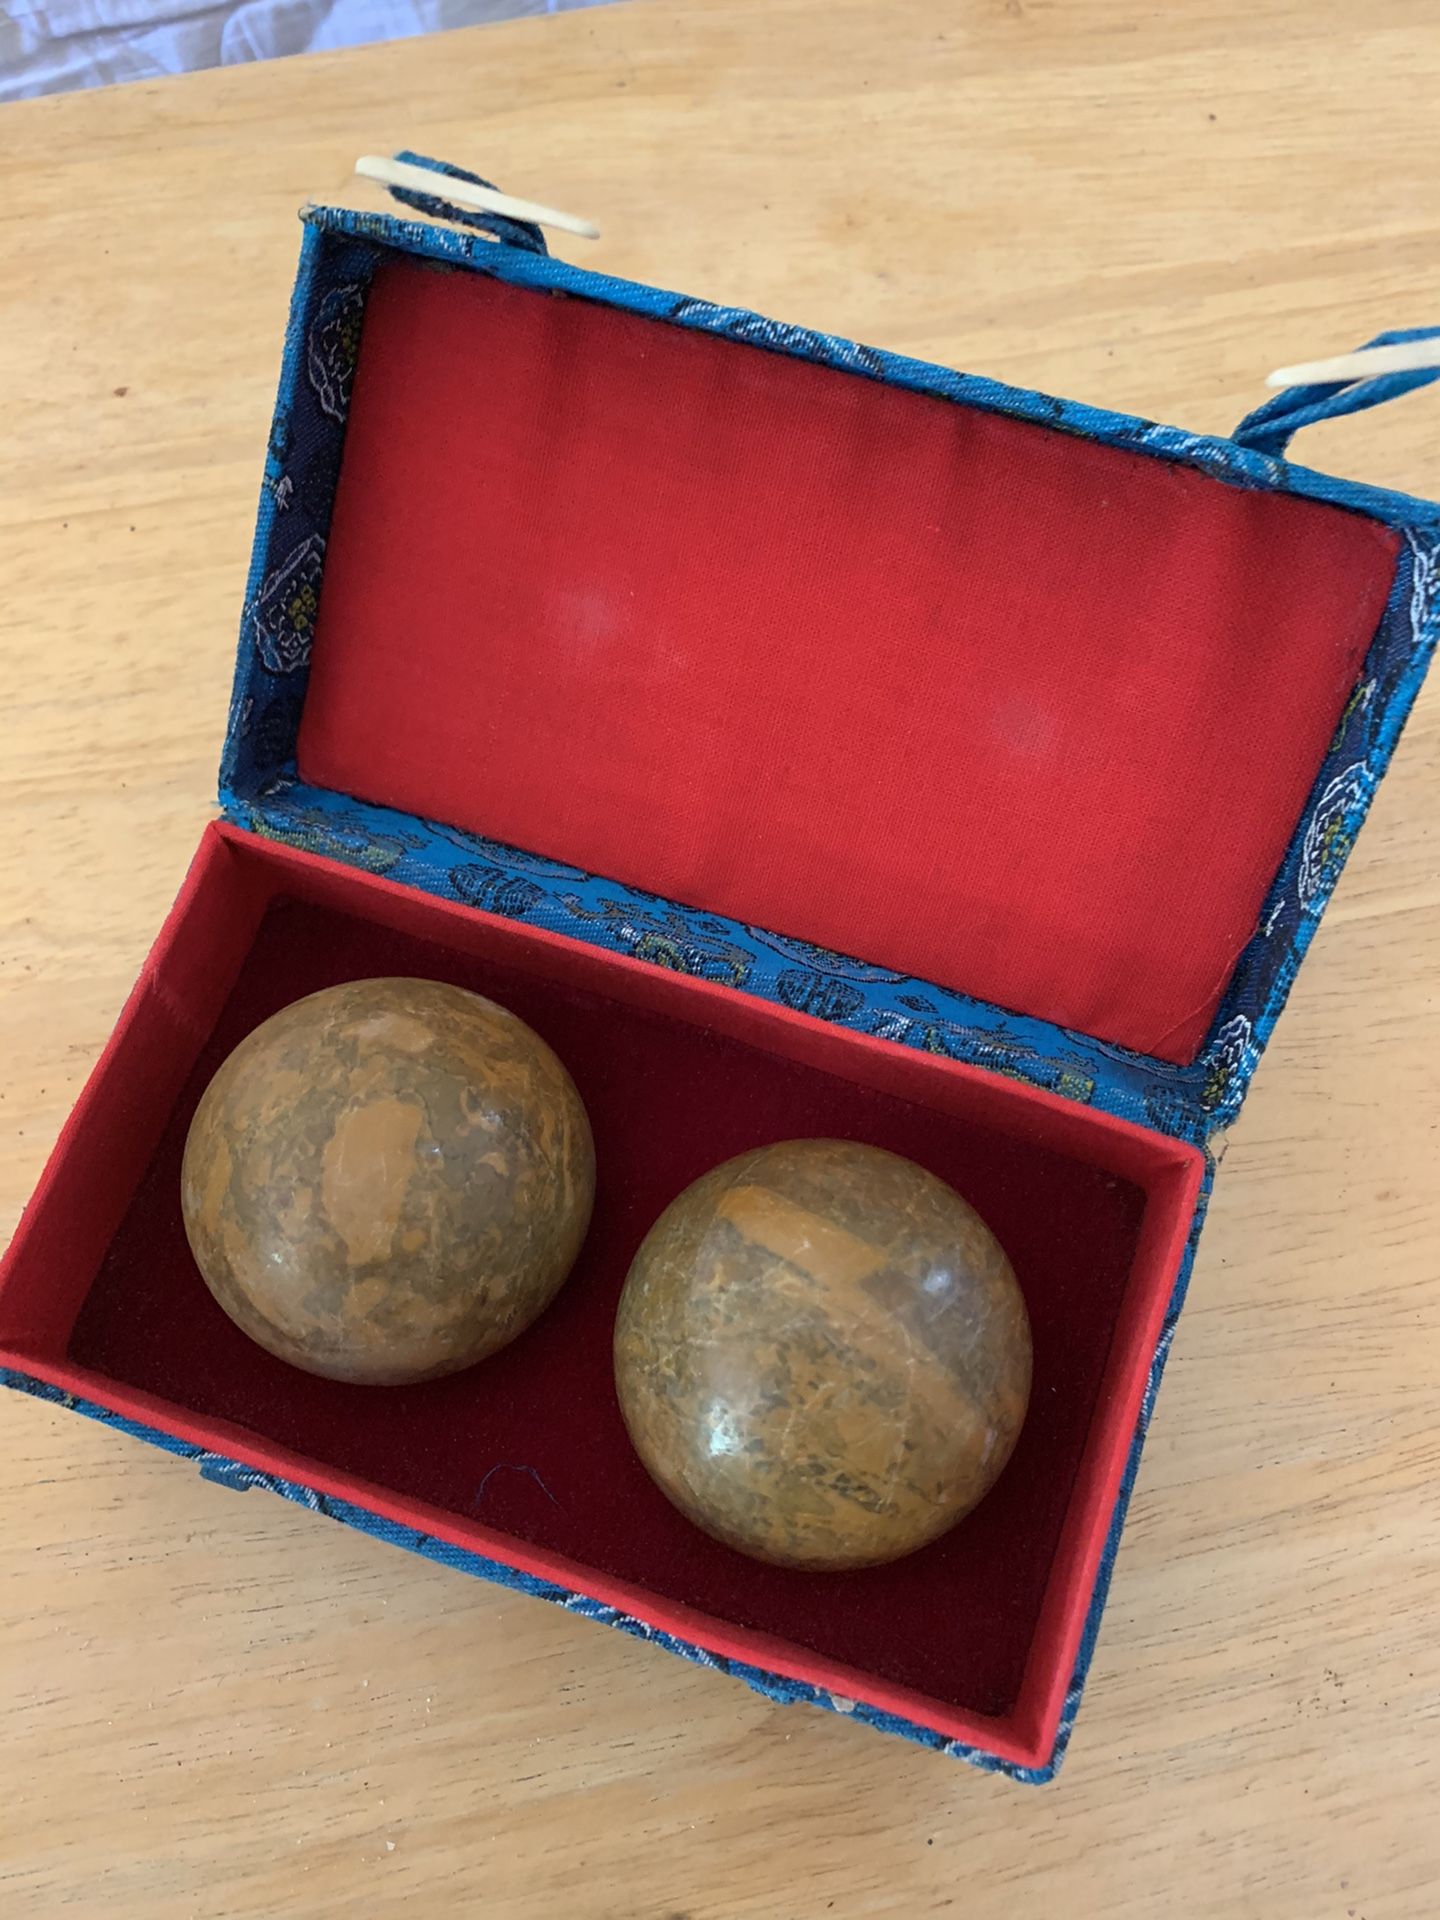 Baoding balls for stress relief, motor skills etc